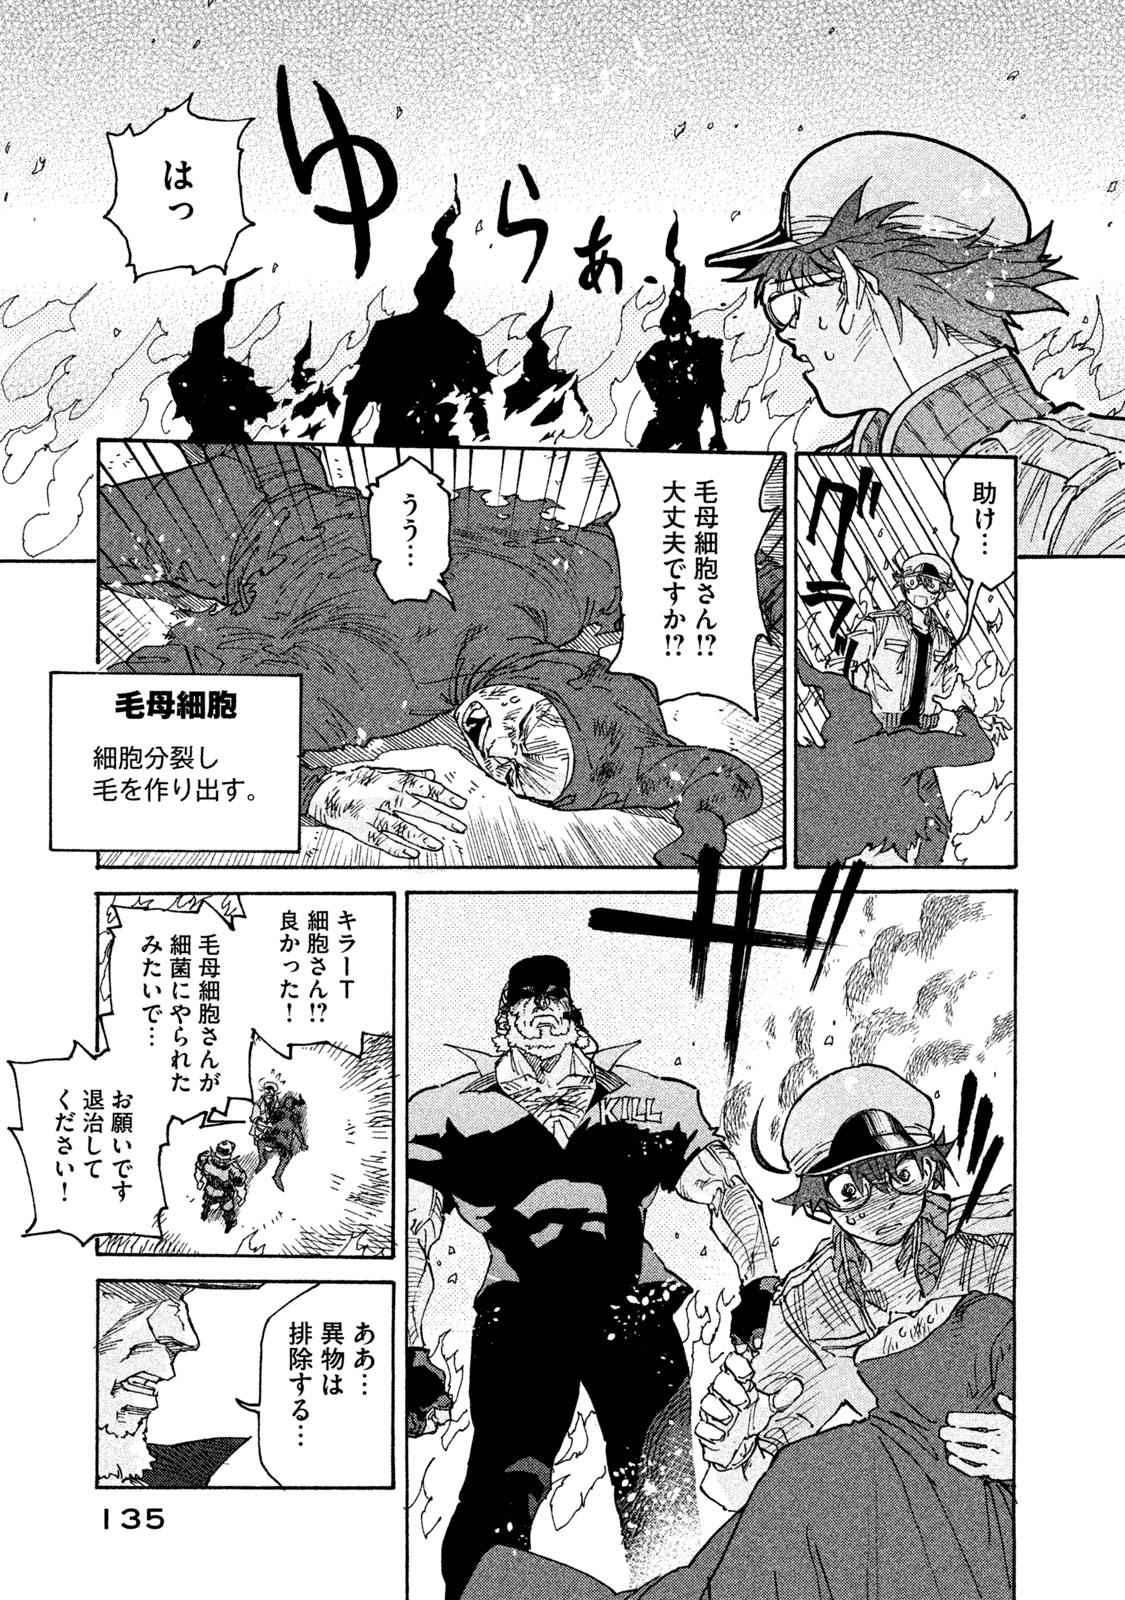 Hataraku Saibou BLACK - Chapter 5 - Page 9